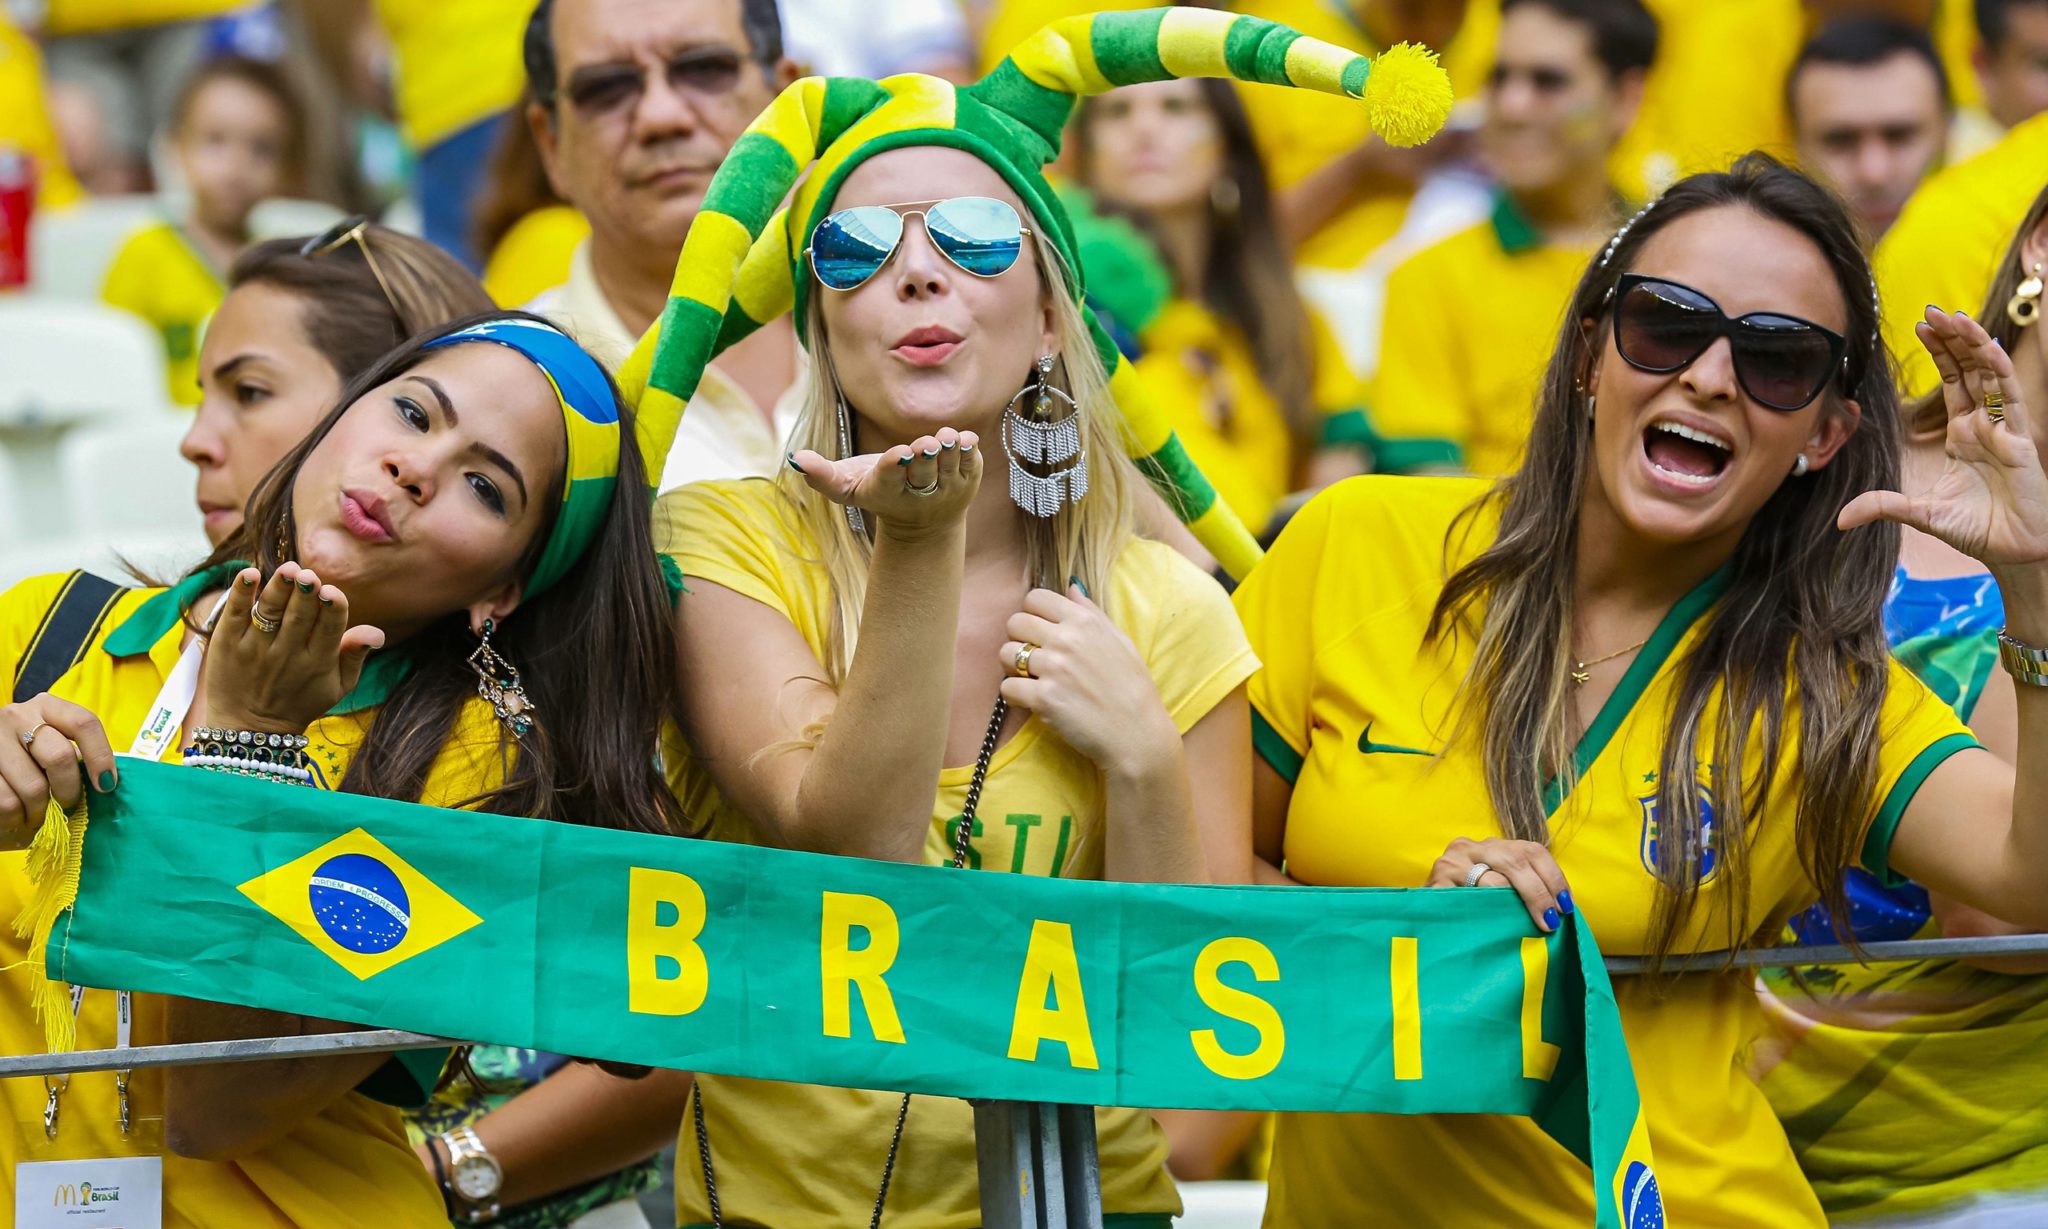 Inside TikTok:  A perspective on Brazilian football clubs